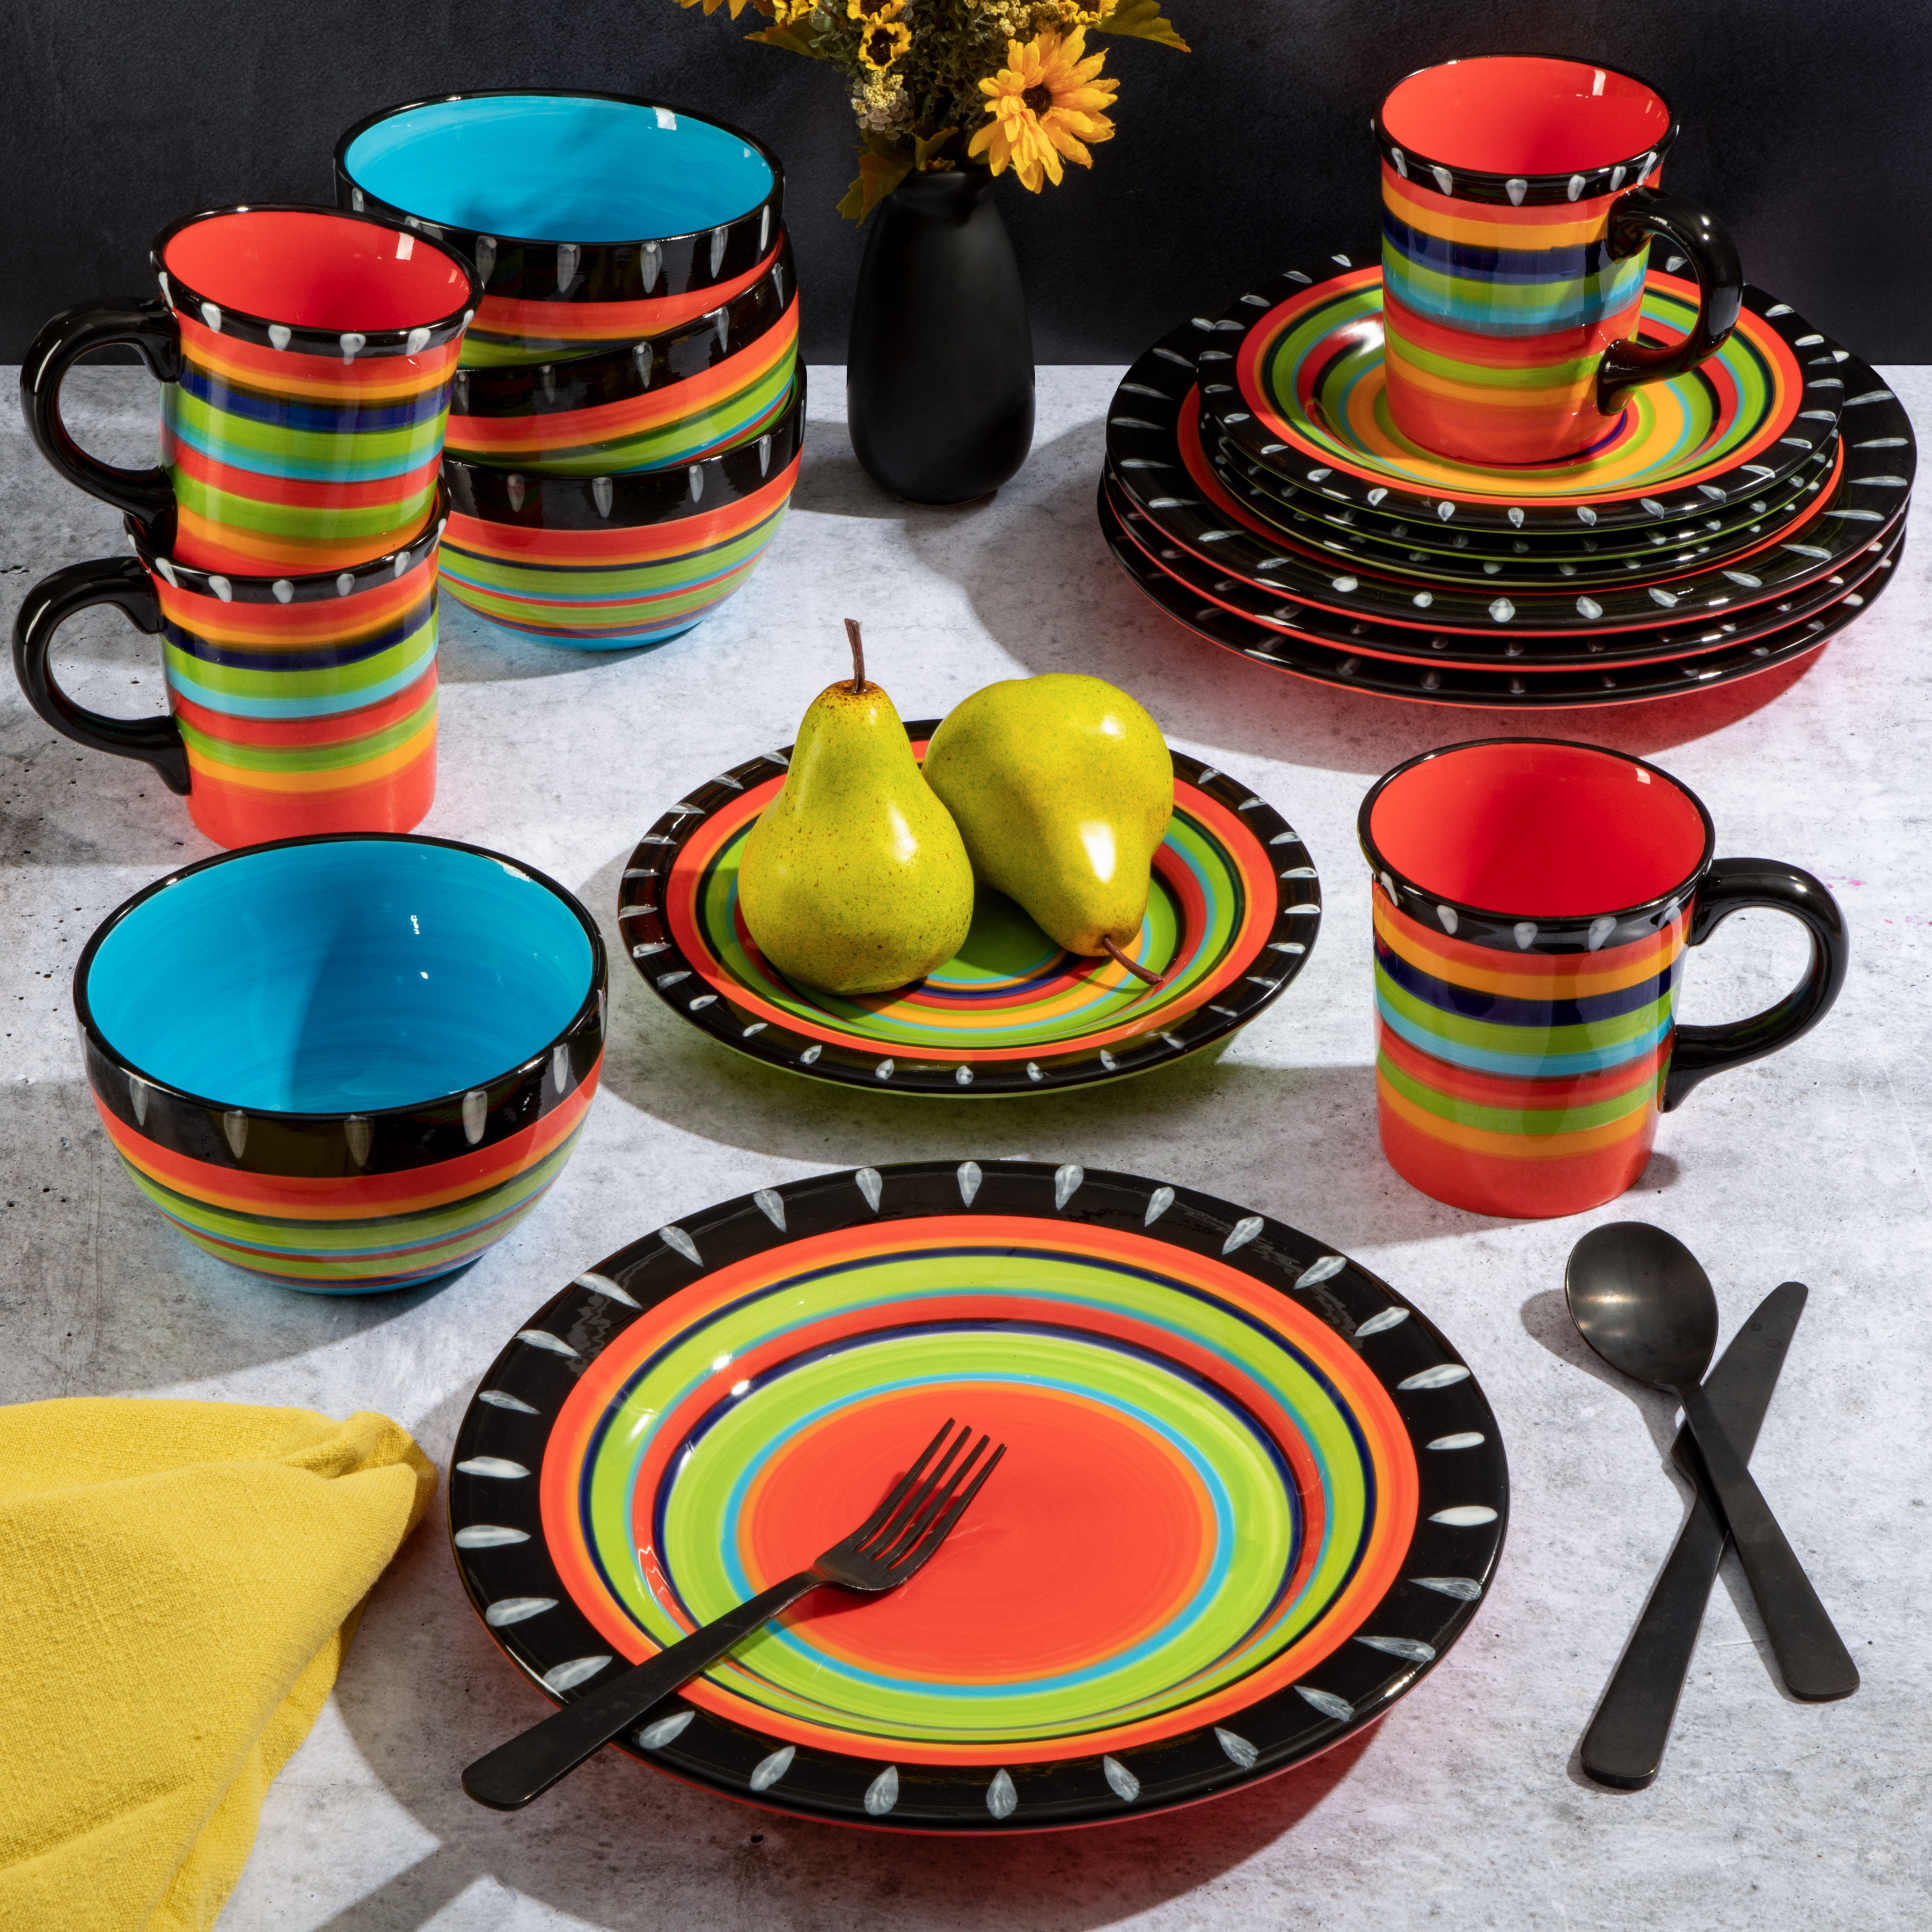 AmorArc Ceramic Dinnerware set (16pcs), Stoneware Plates and Bowls Set 